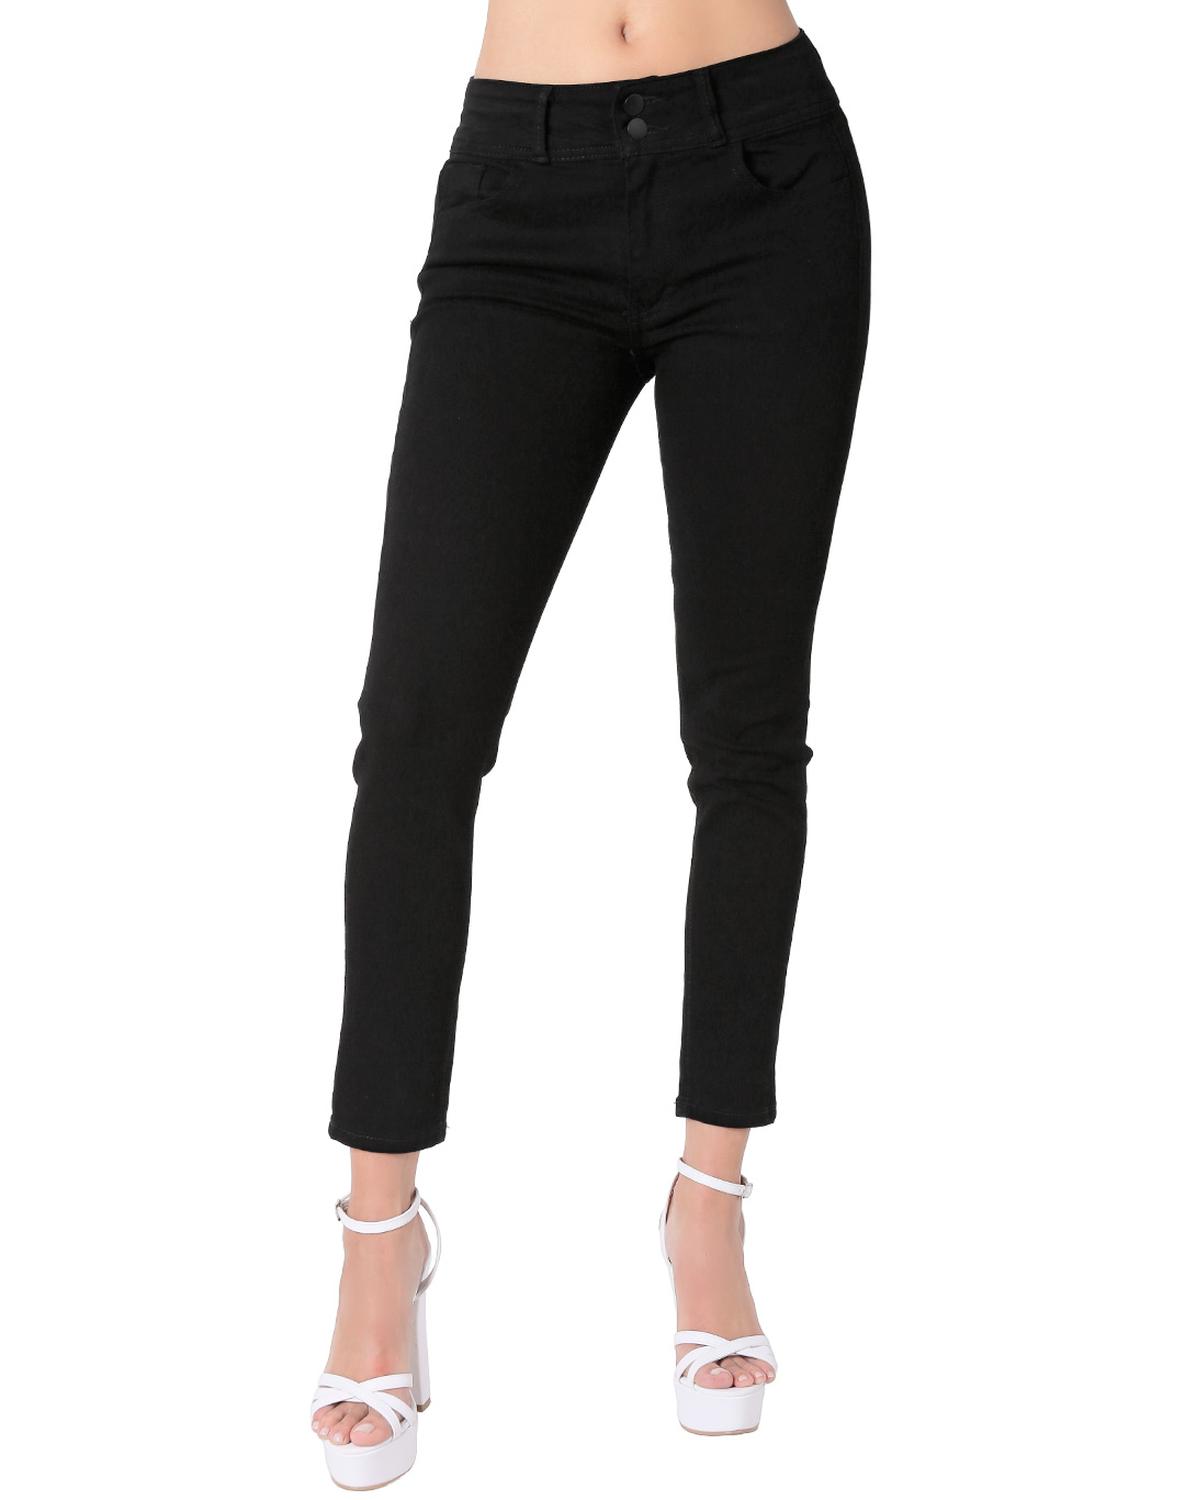 Jeans Moda Skinny Mujer Negro Stfashion 63104610